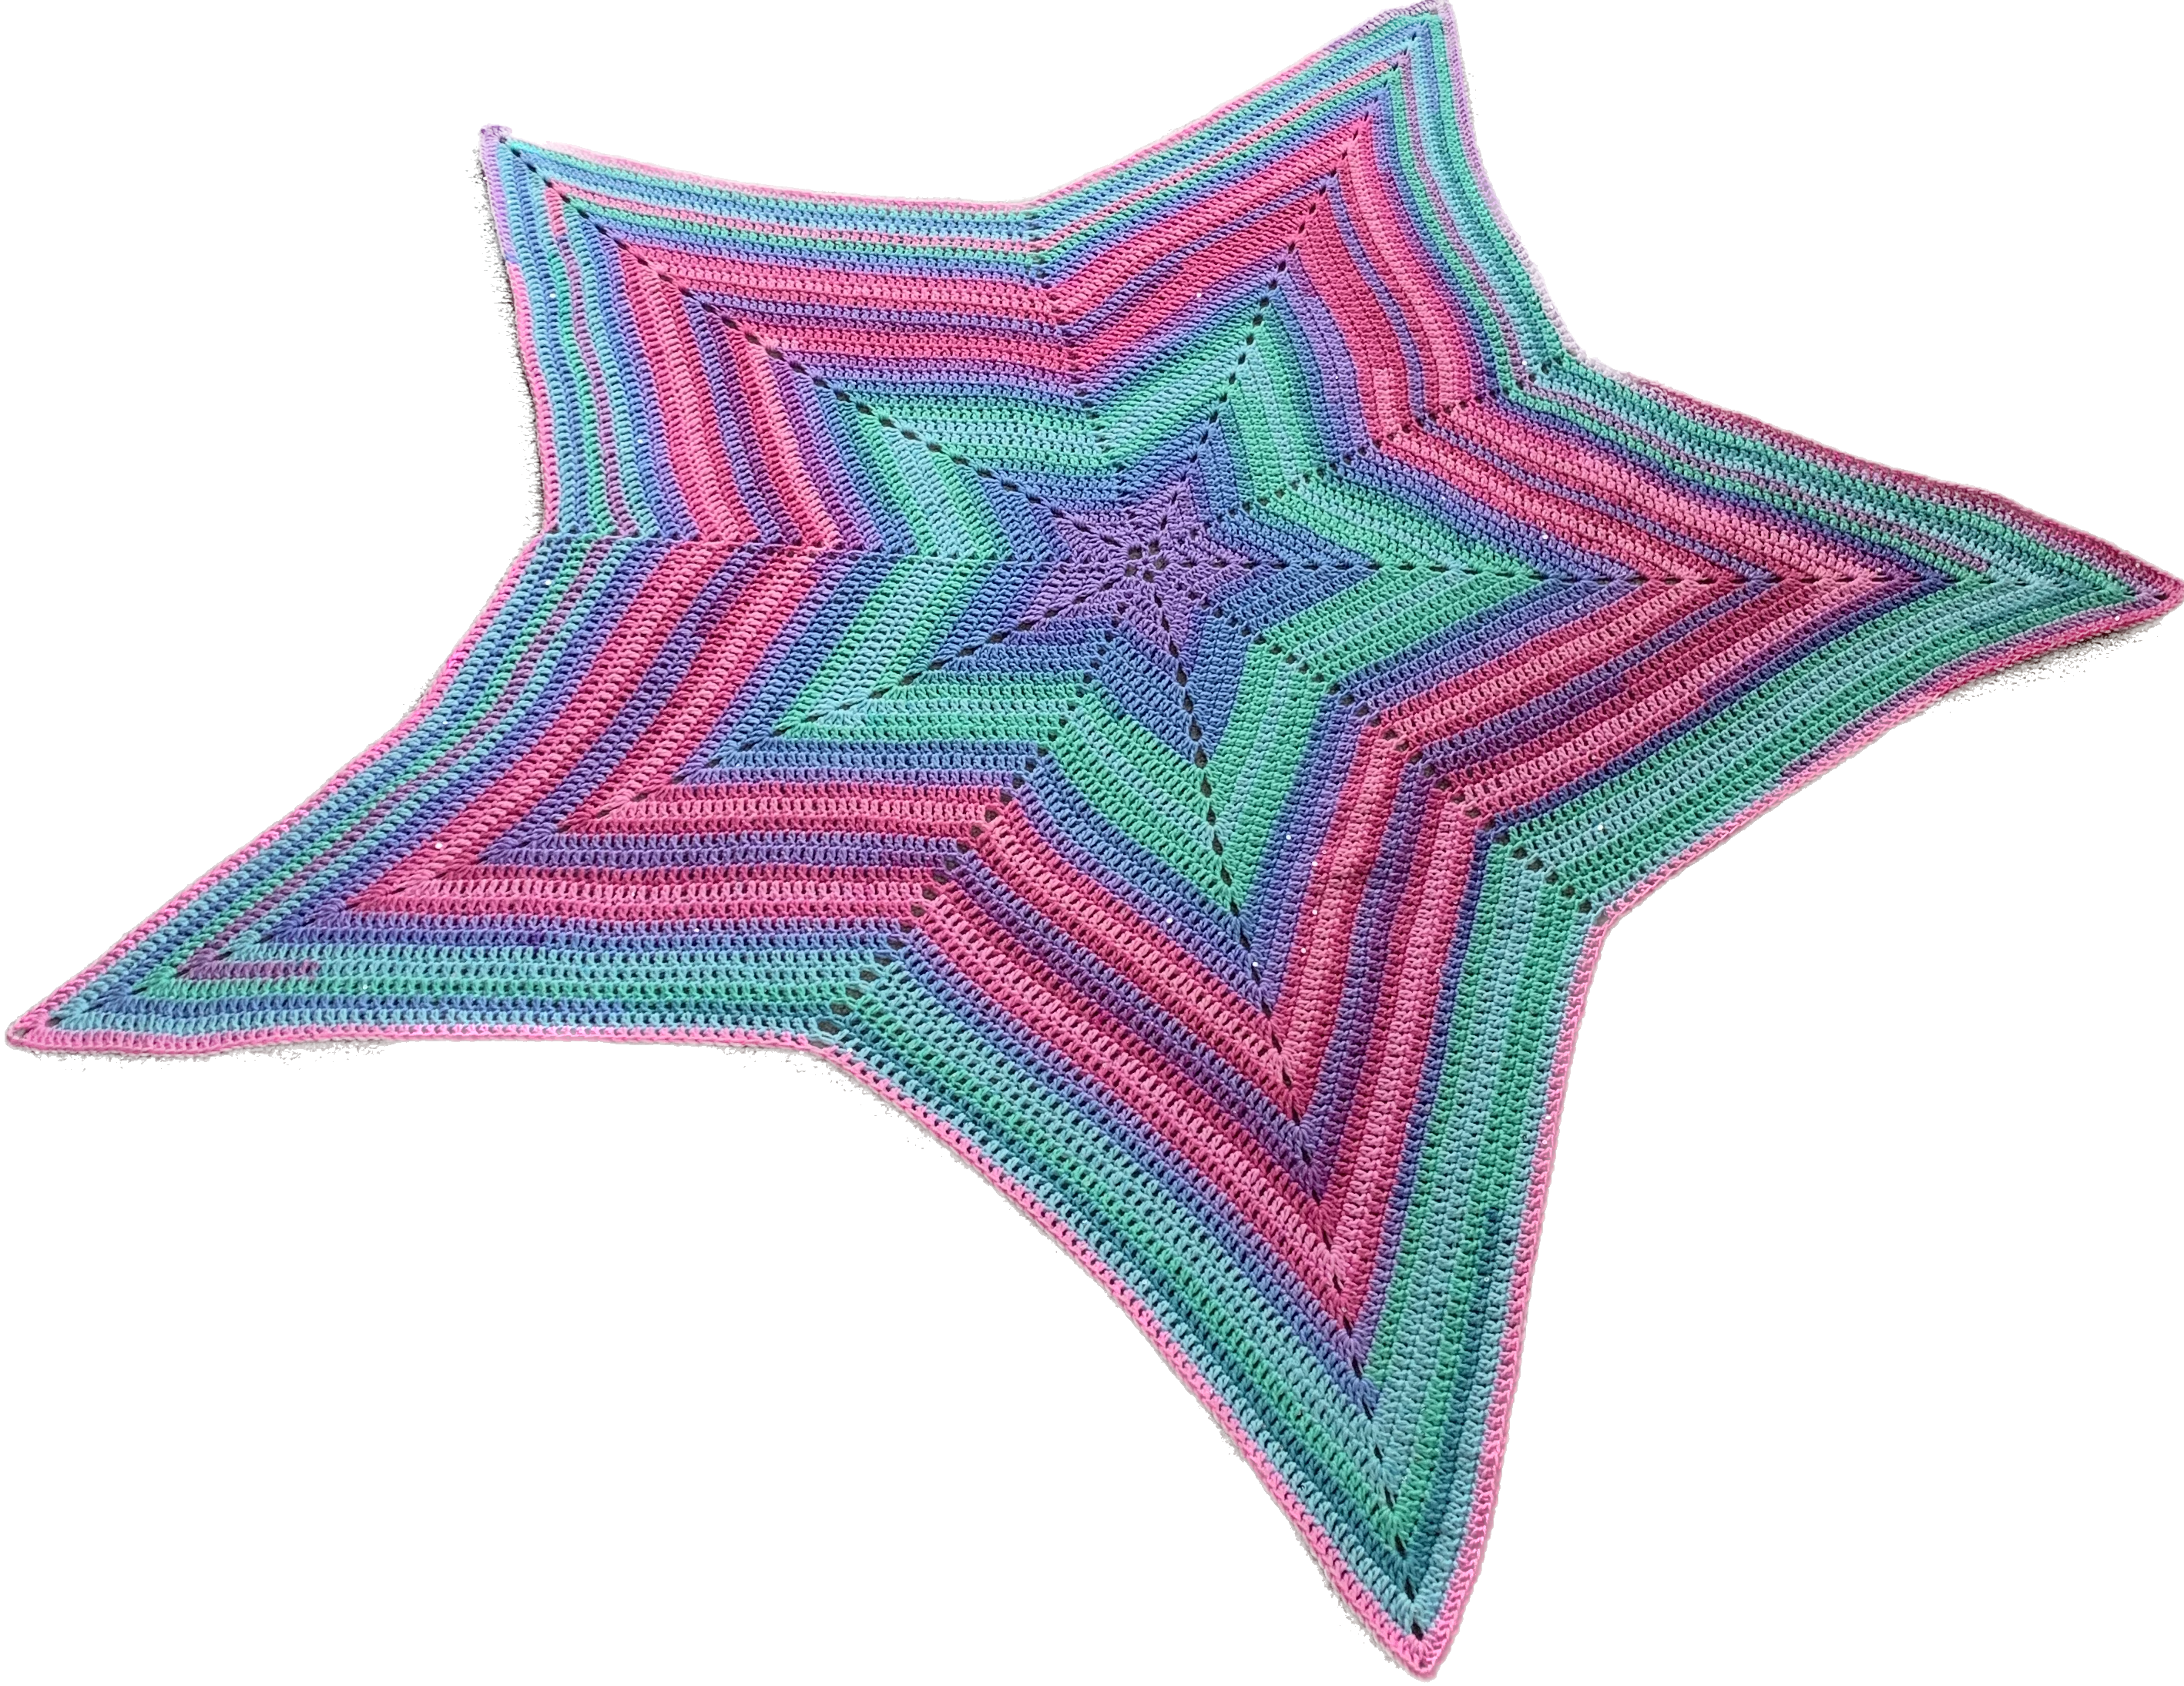 pastel crochet blanket in the shape of a star